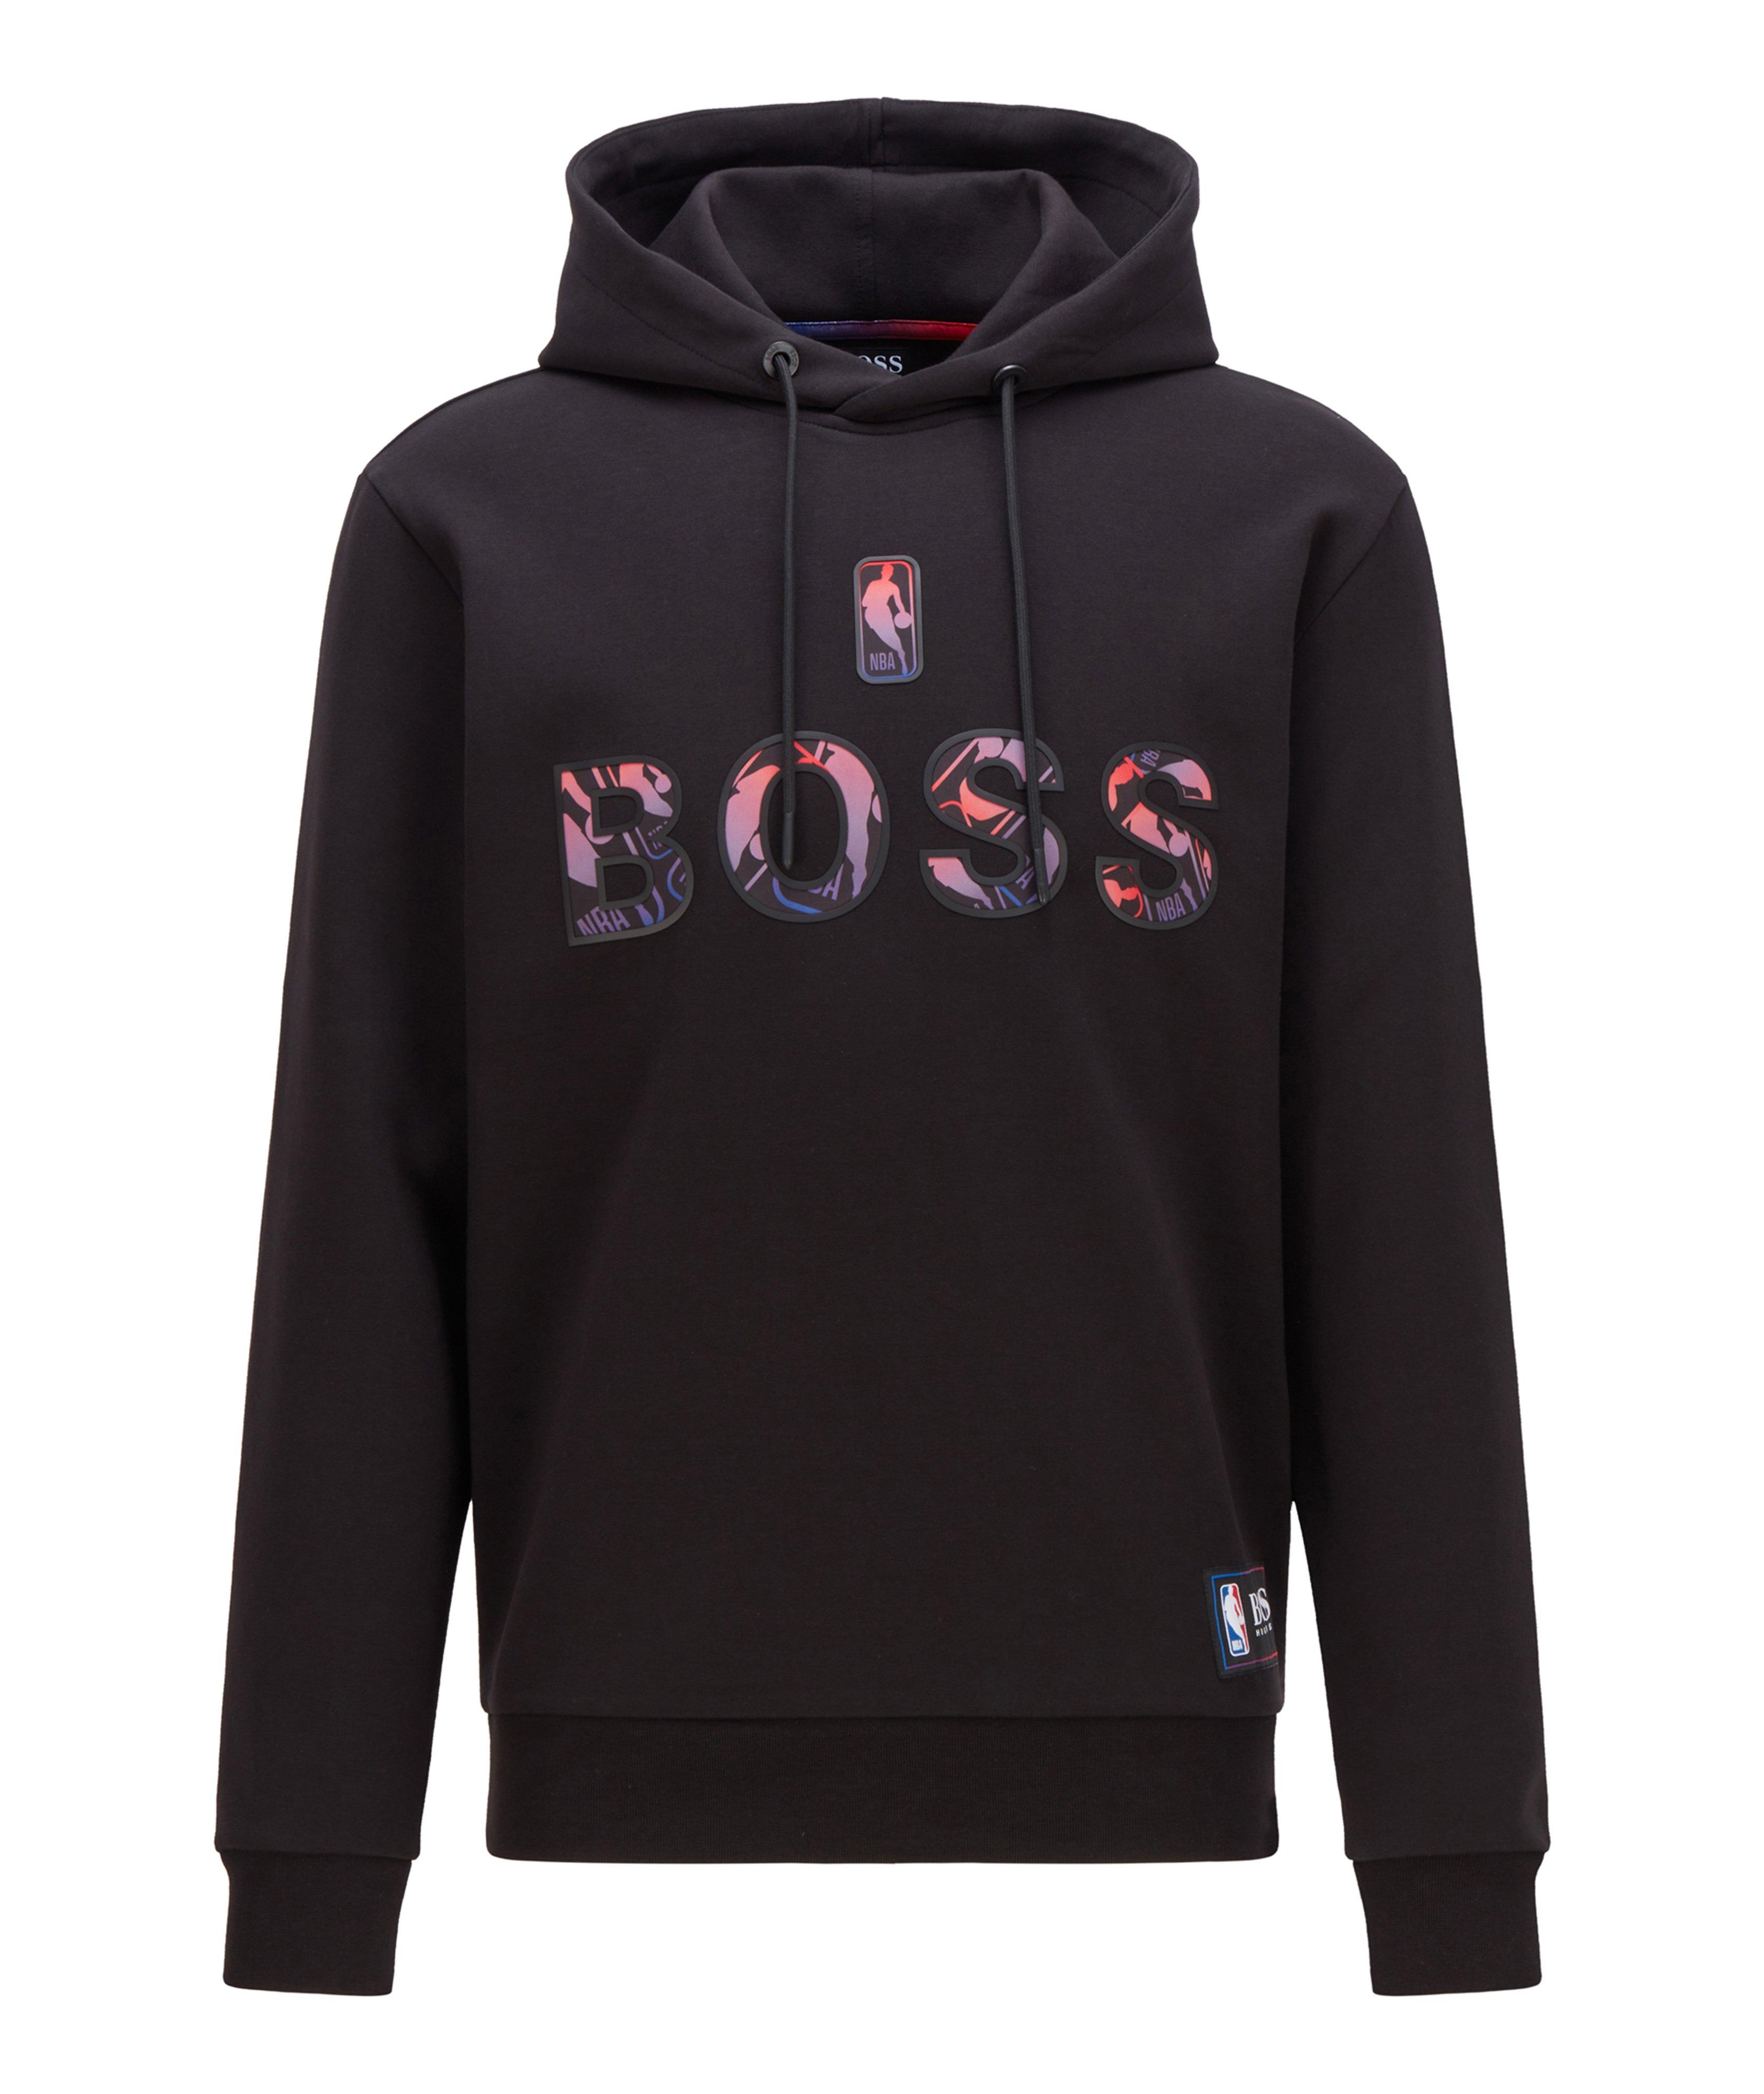 BOSS X NBA Logo Cotton-Blend Hoodie image 0